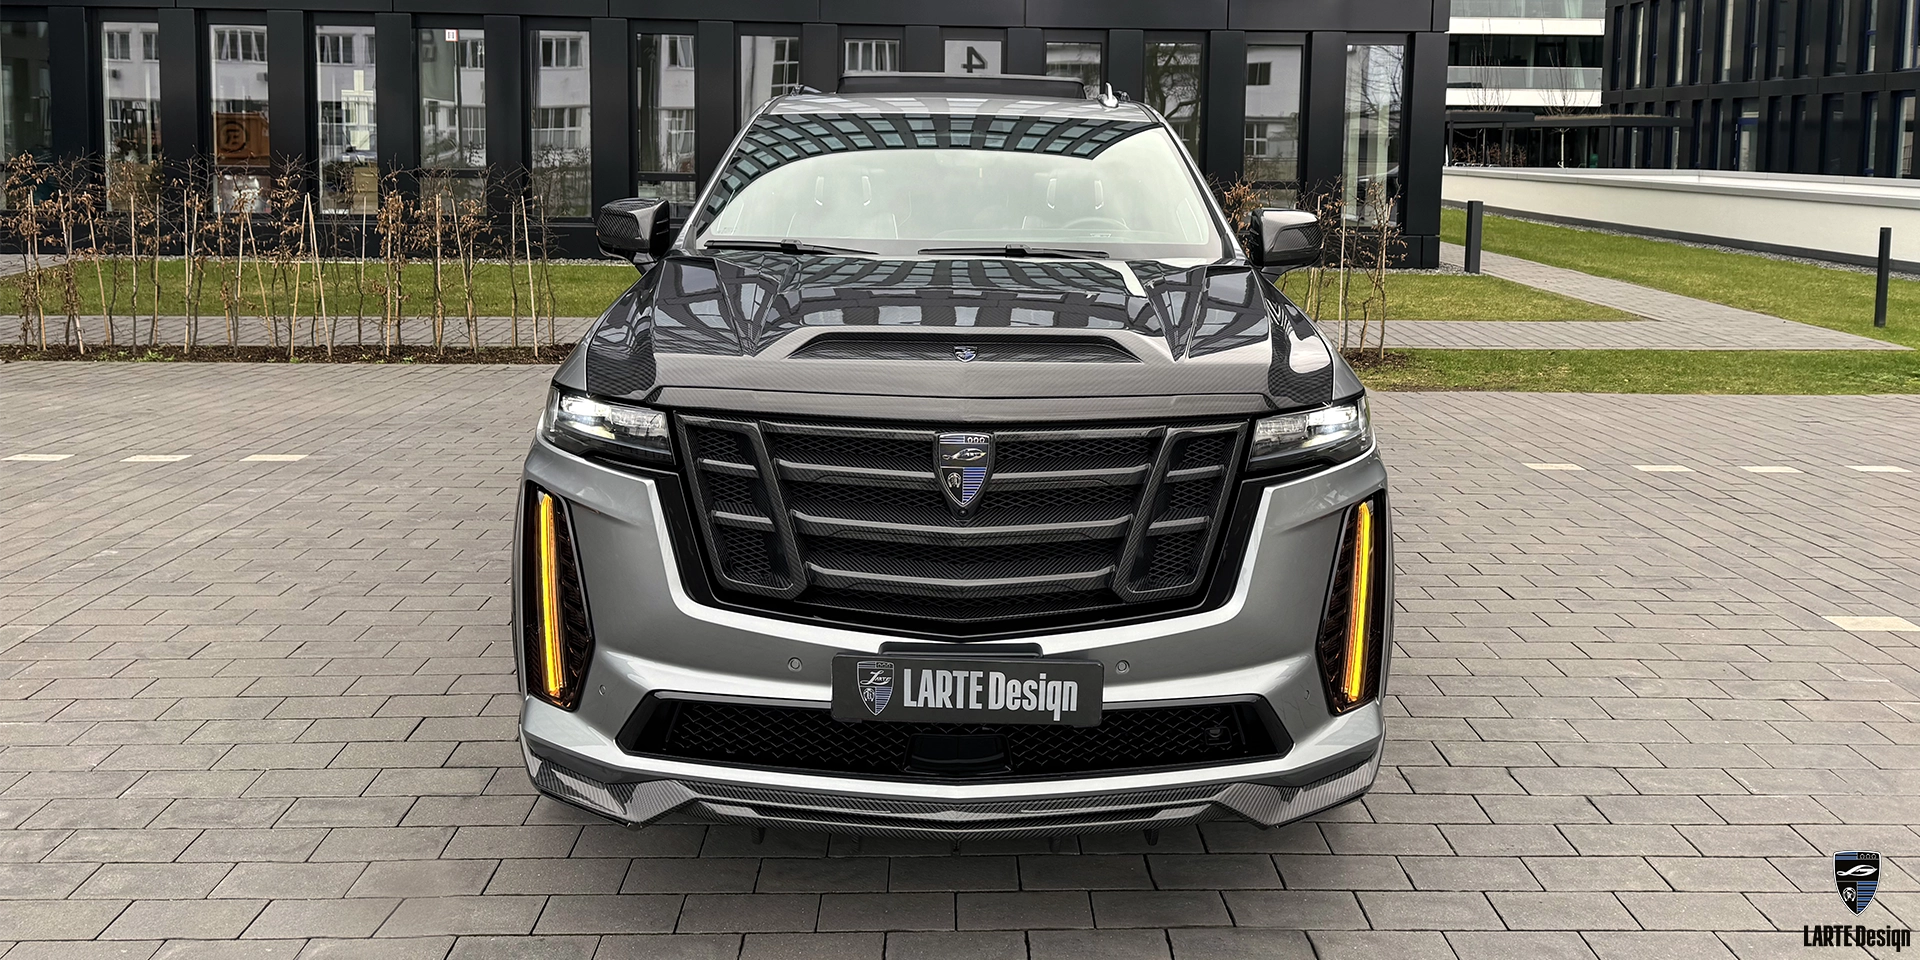 Carbon fiber grille trim in Cadillac Escalade-V ESV body kit by LARTE Design